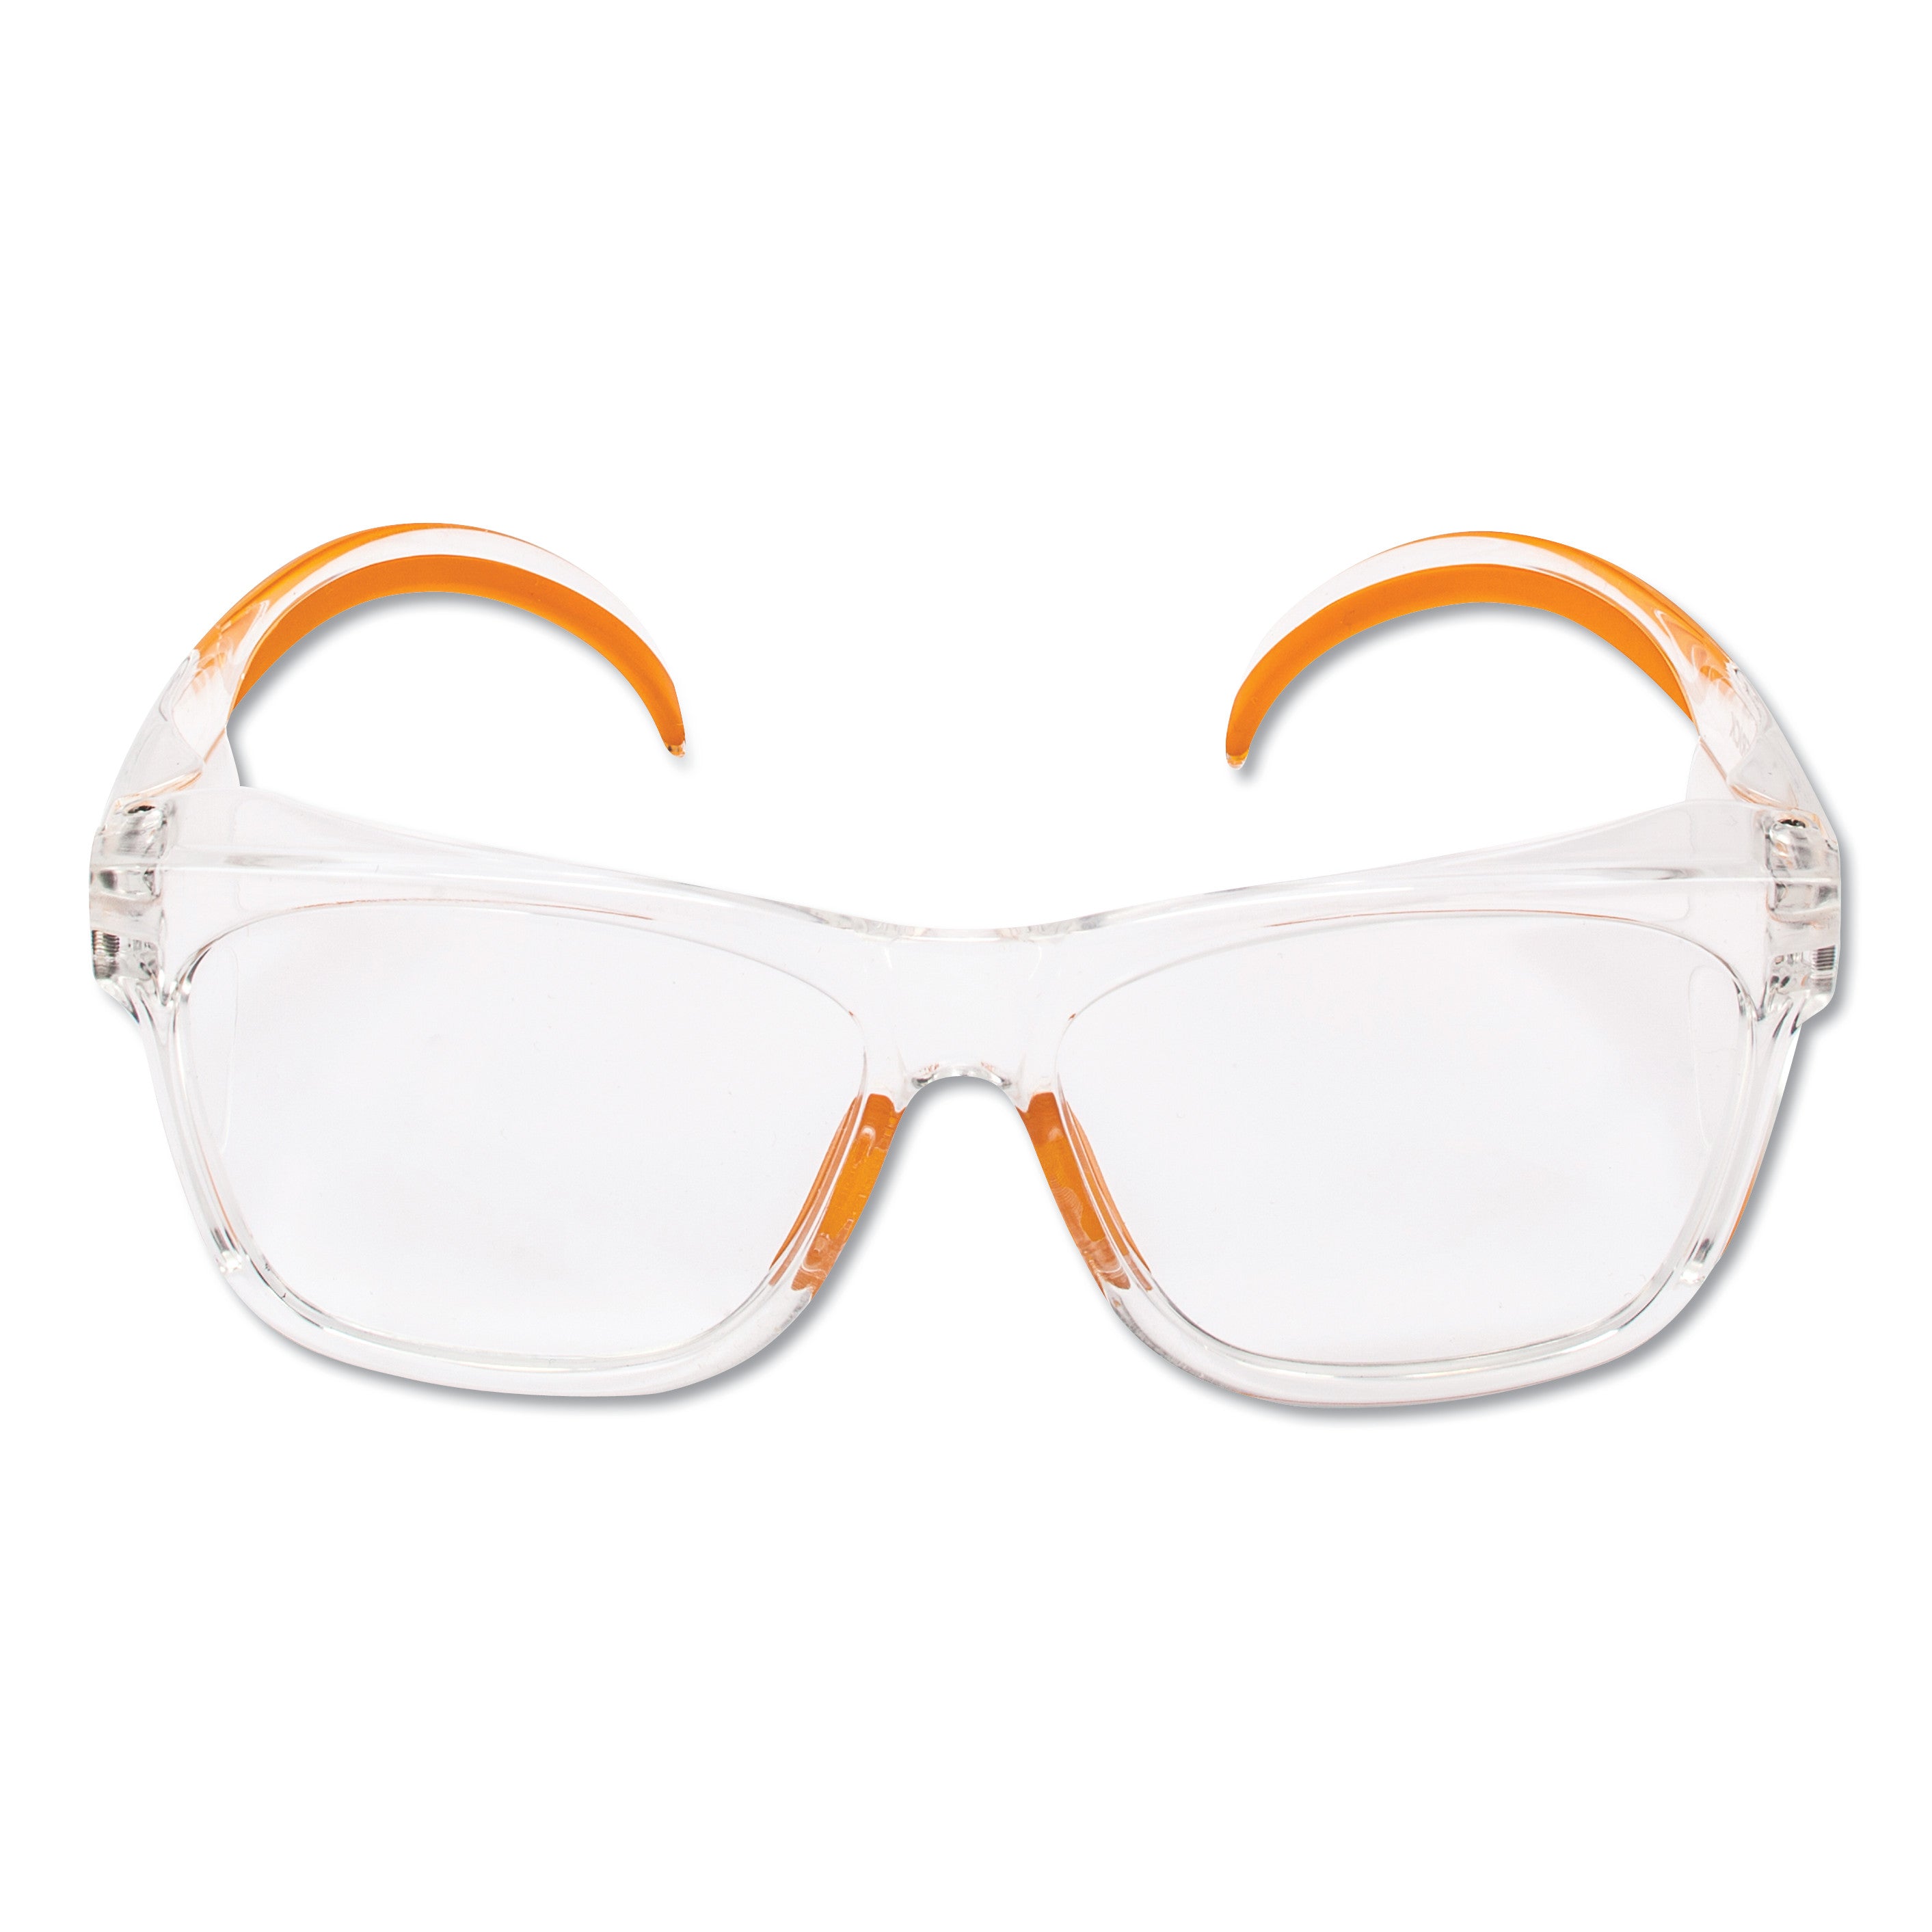 maverick-safety-glasses-clear-orange-polycarbonate-frame-12-box_kcc49301 - 1